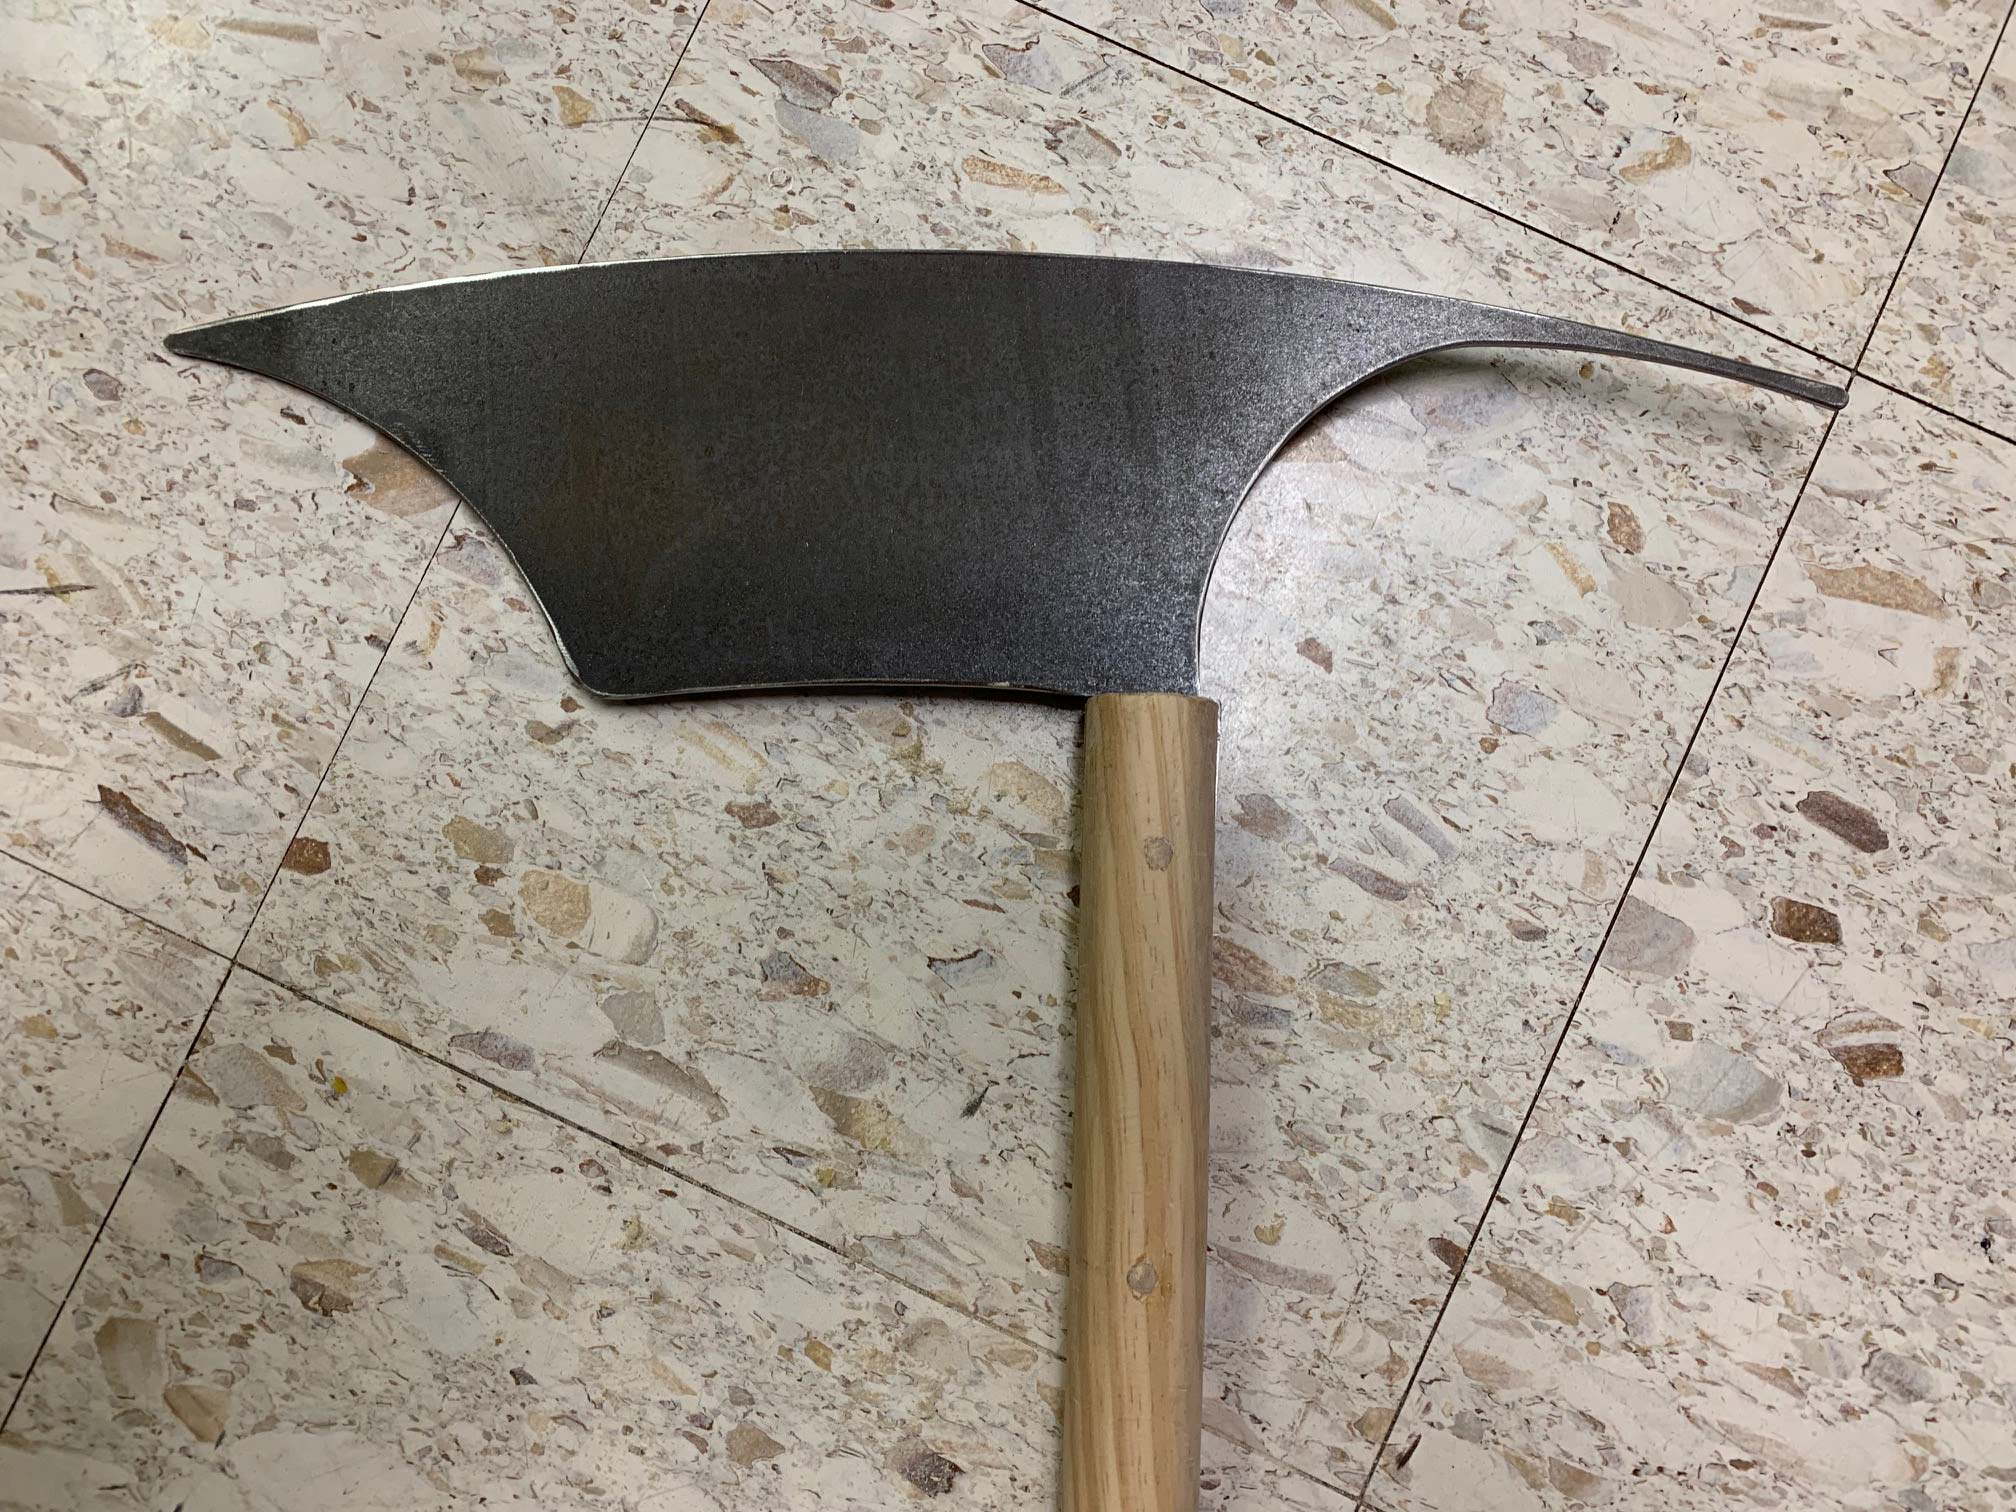 Finished headhunter axe